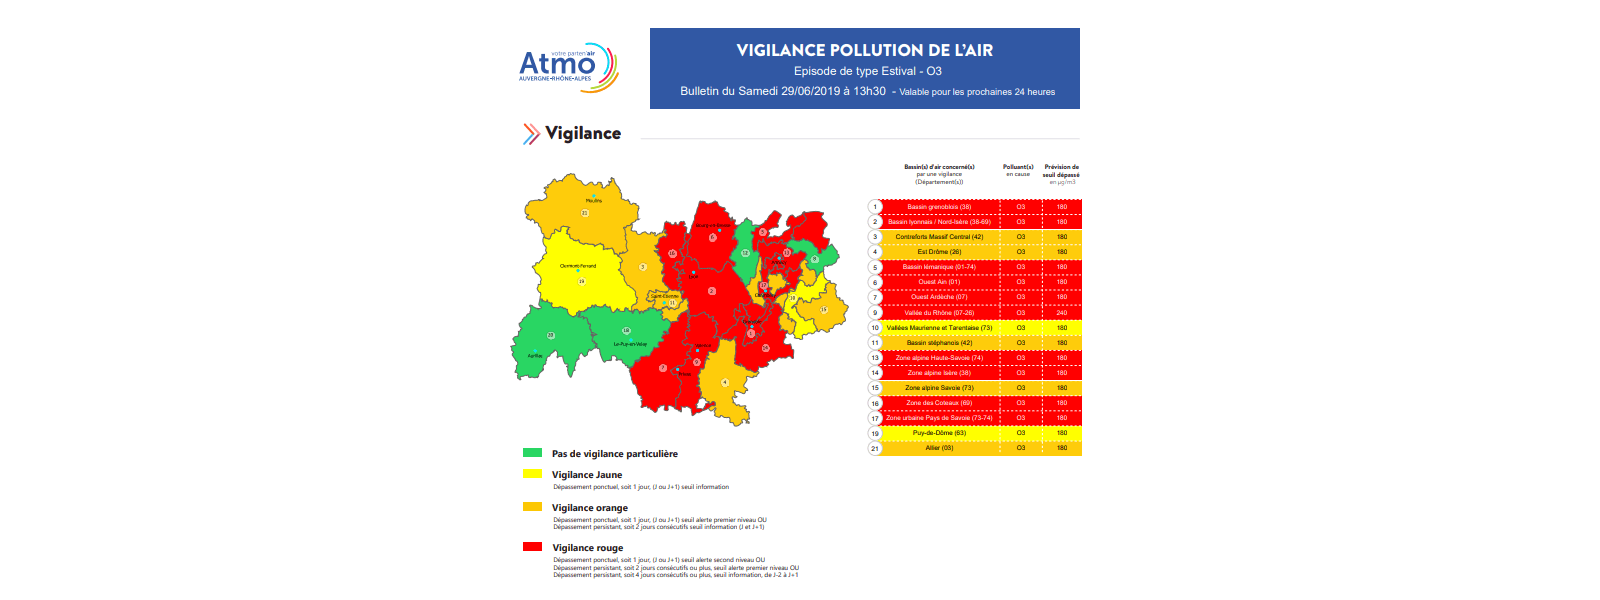 Vigilance pollution air - 29 juin 2019